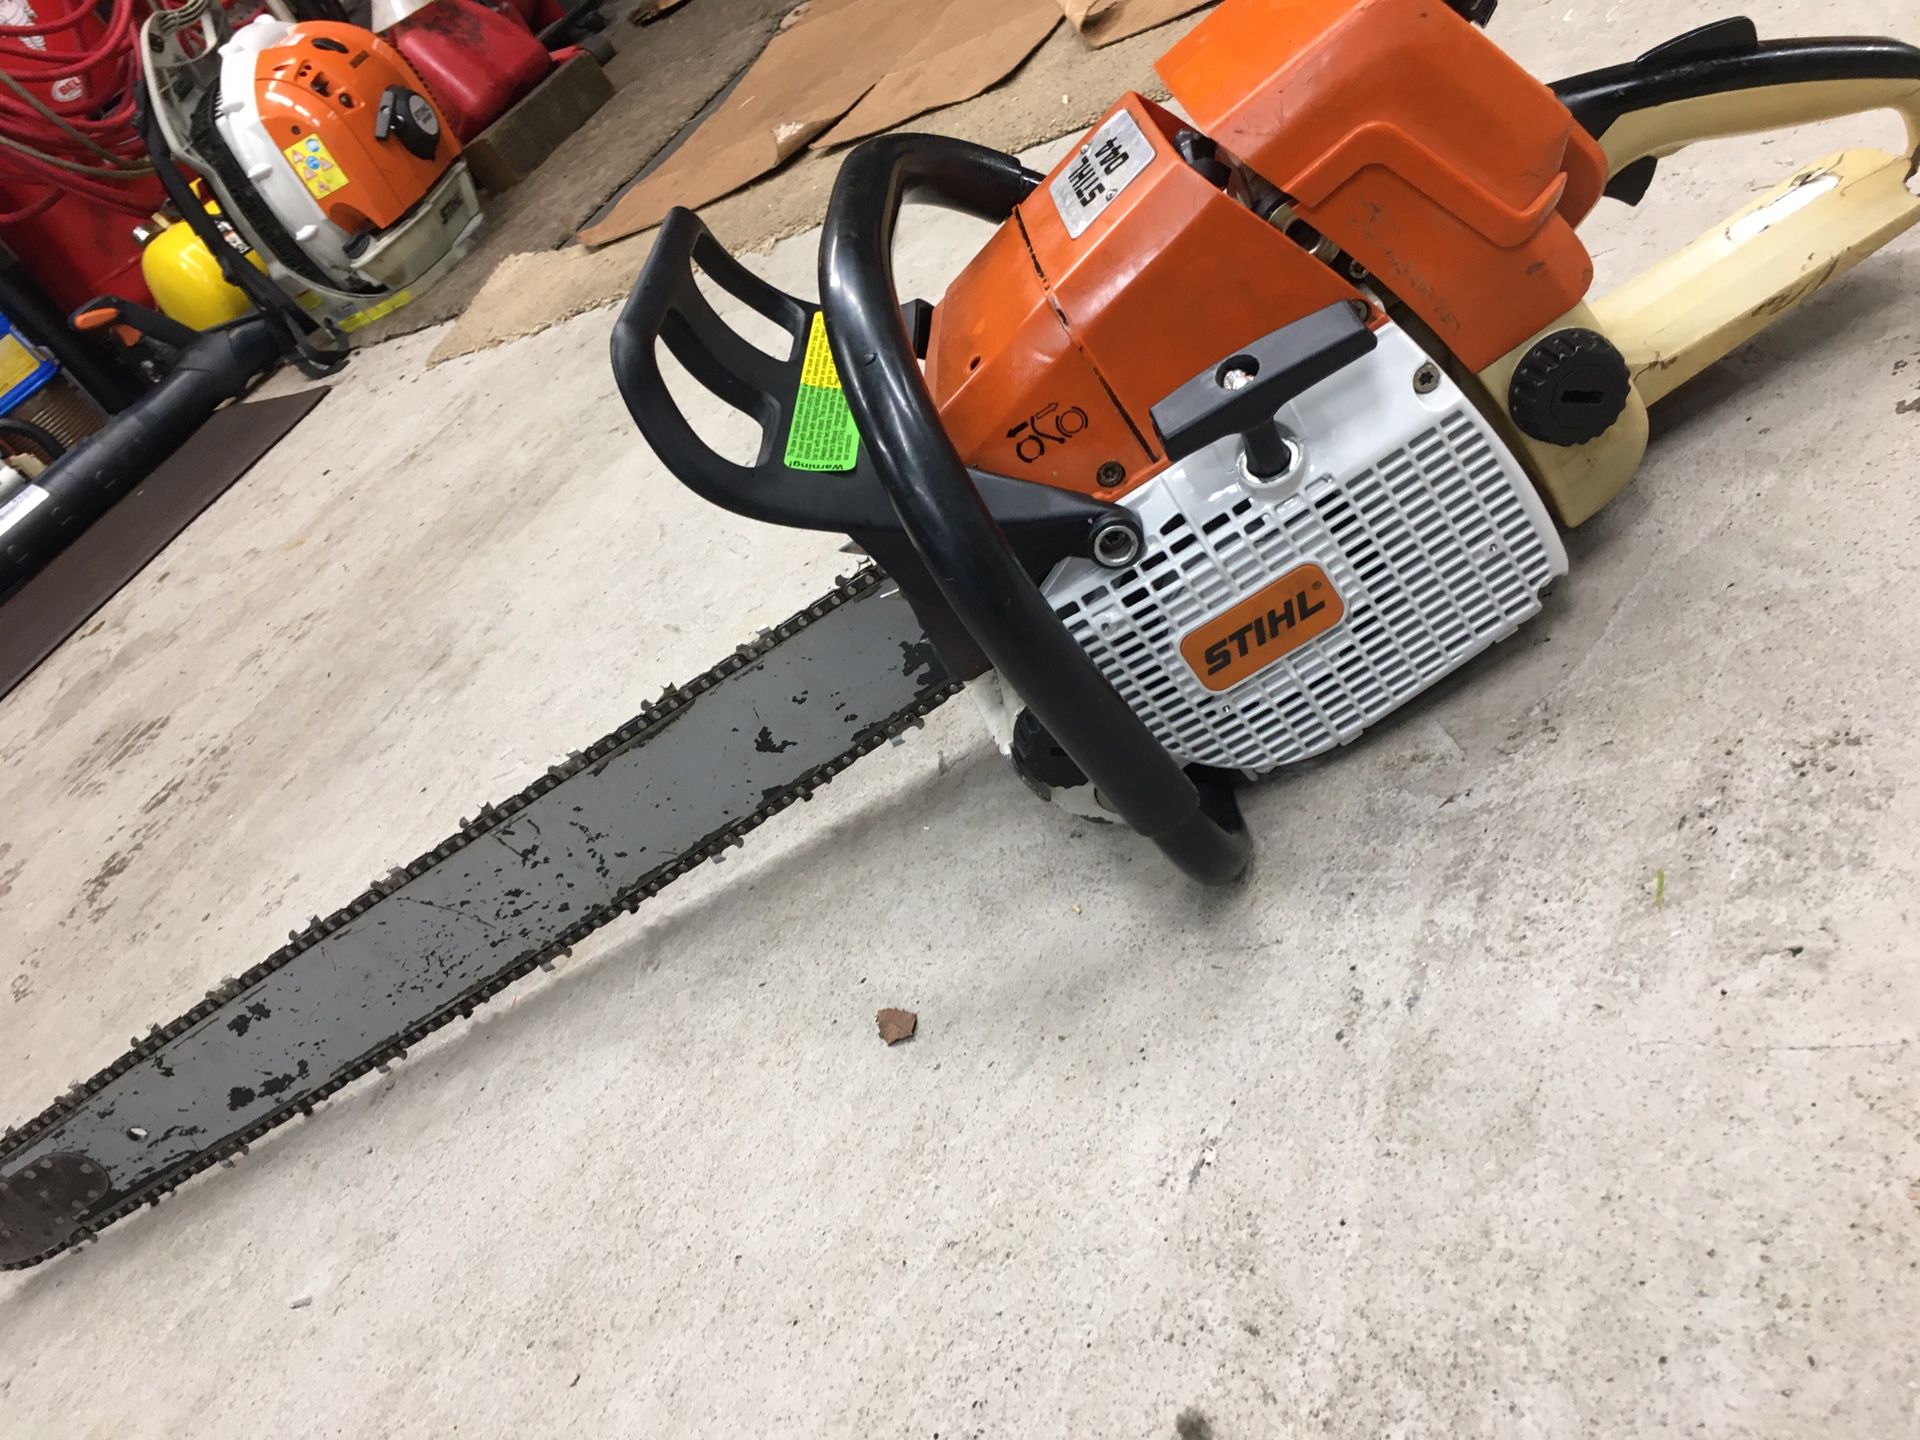 Stihl 044 chainsaw